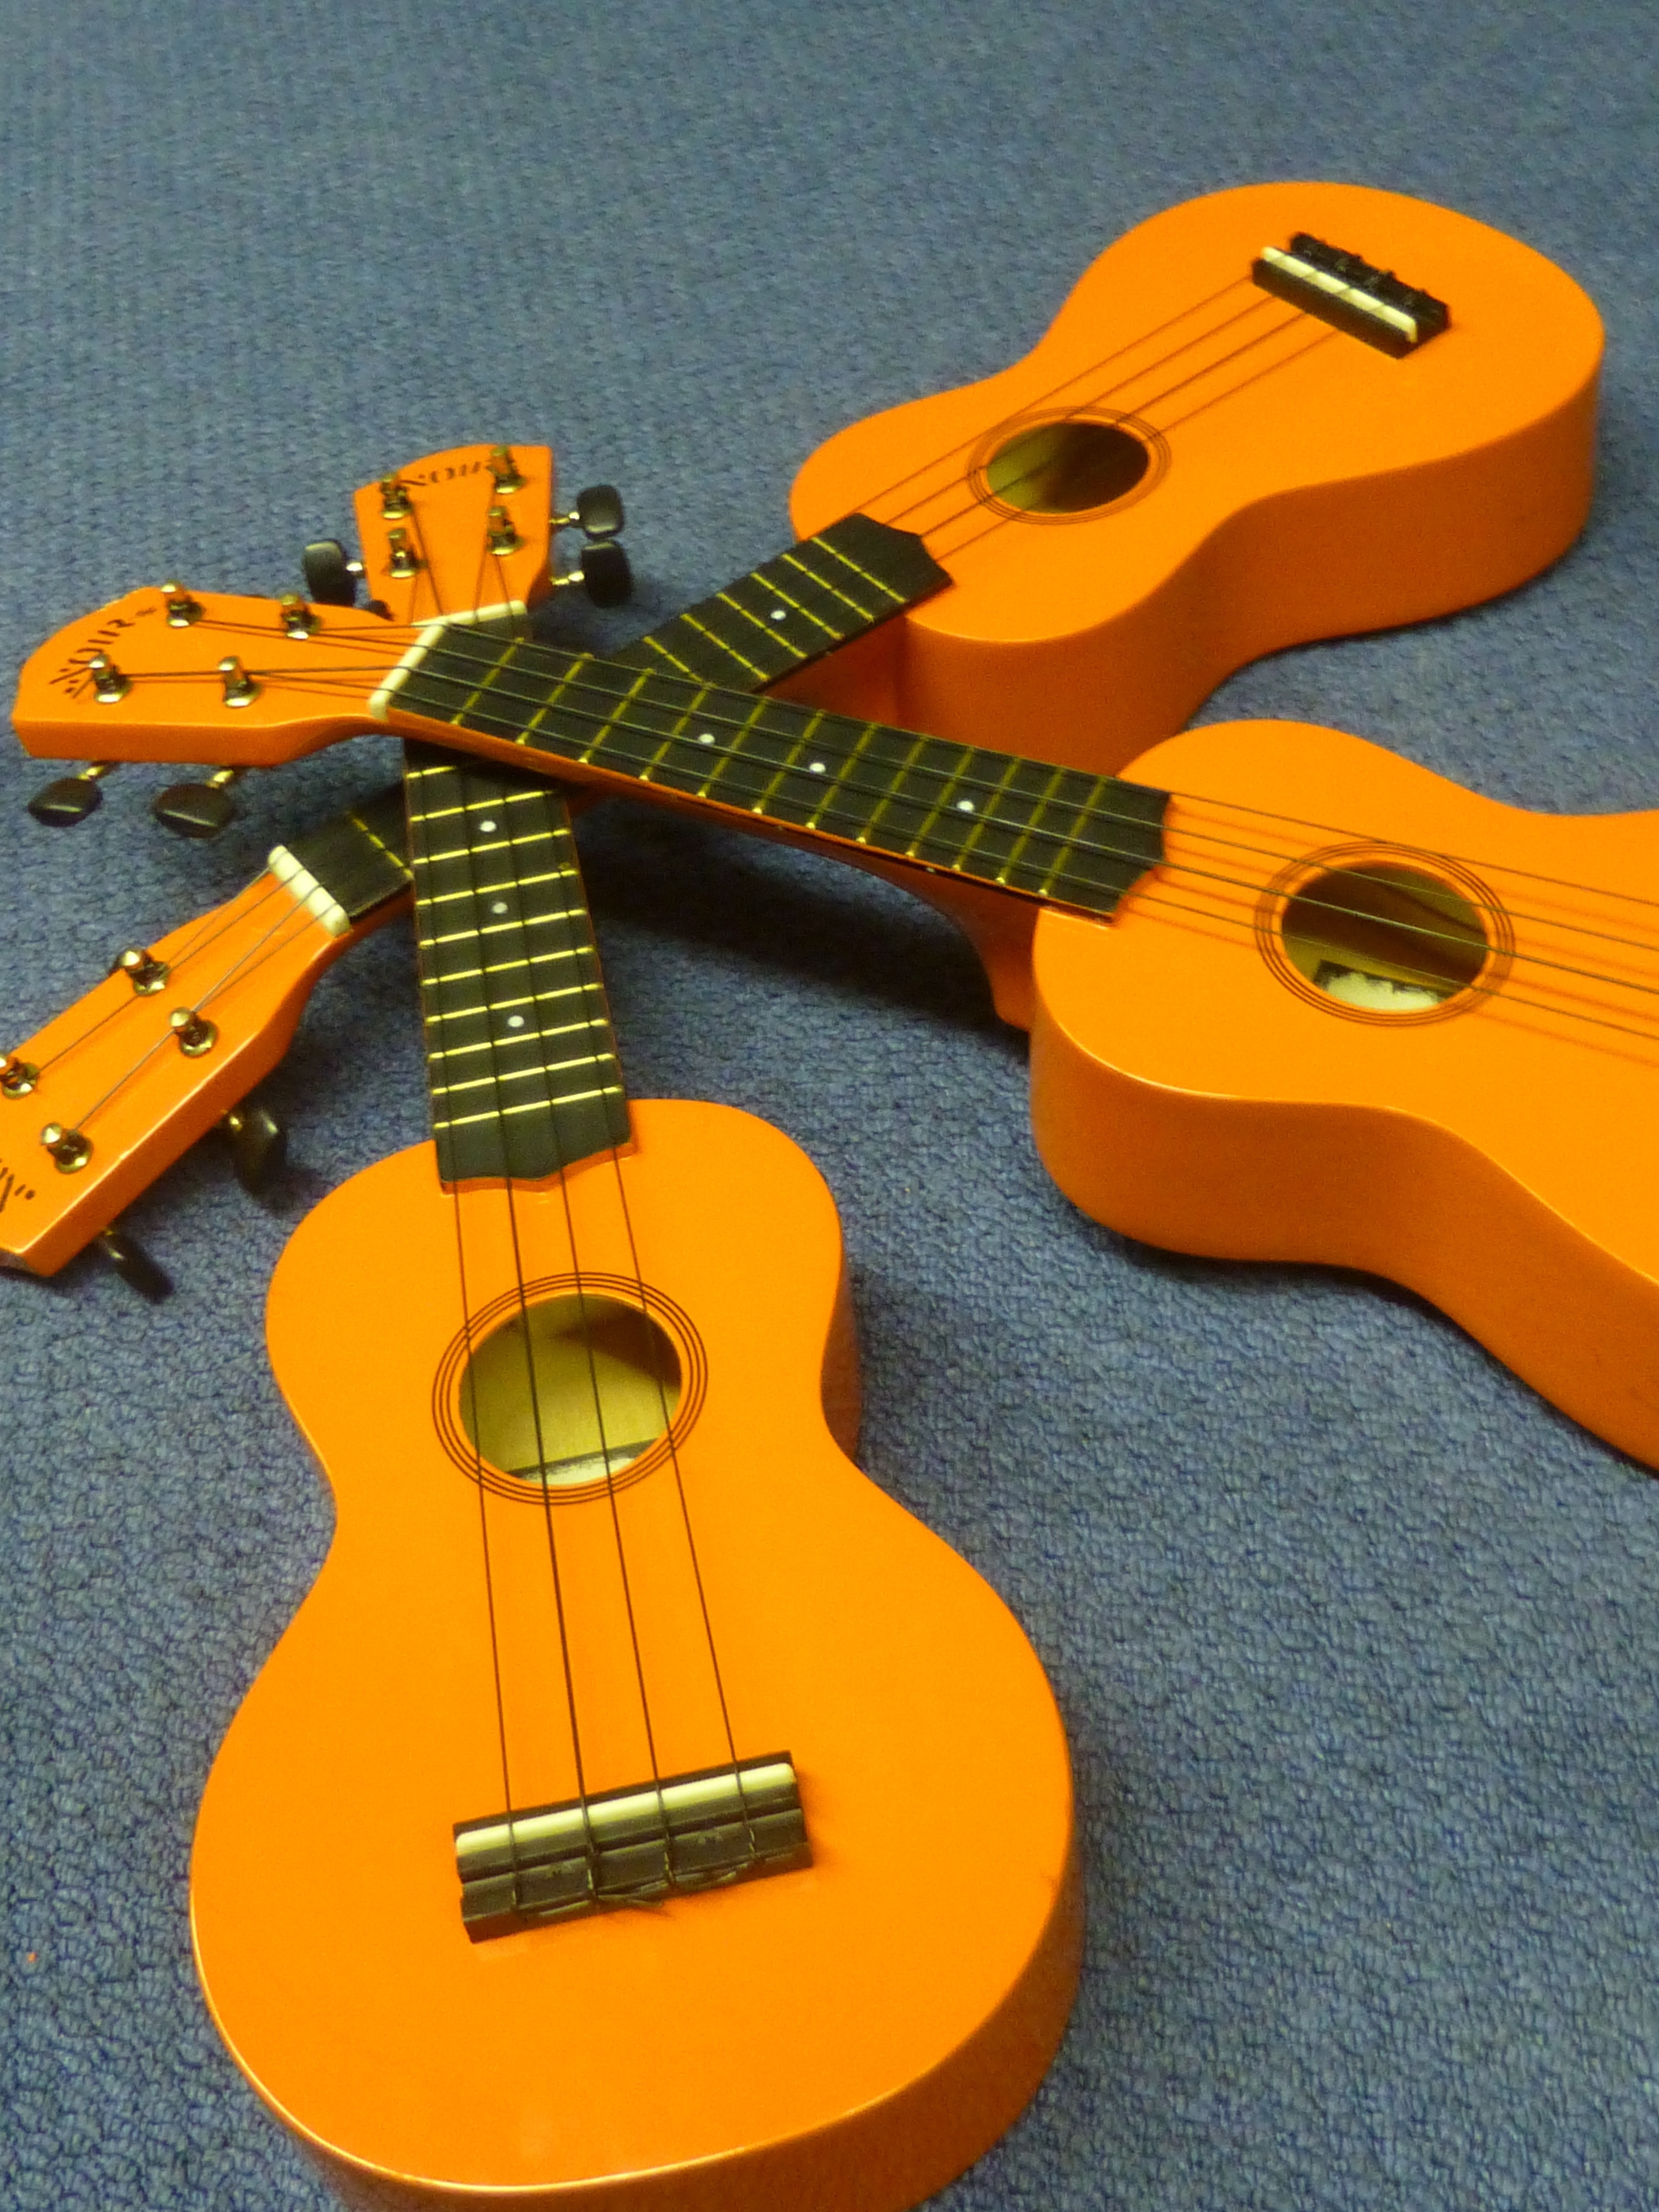 3 brown and black ukuleles